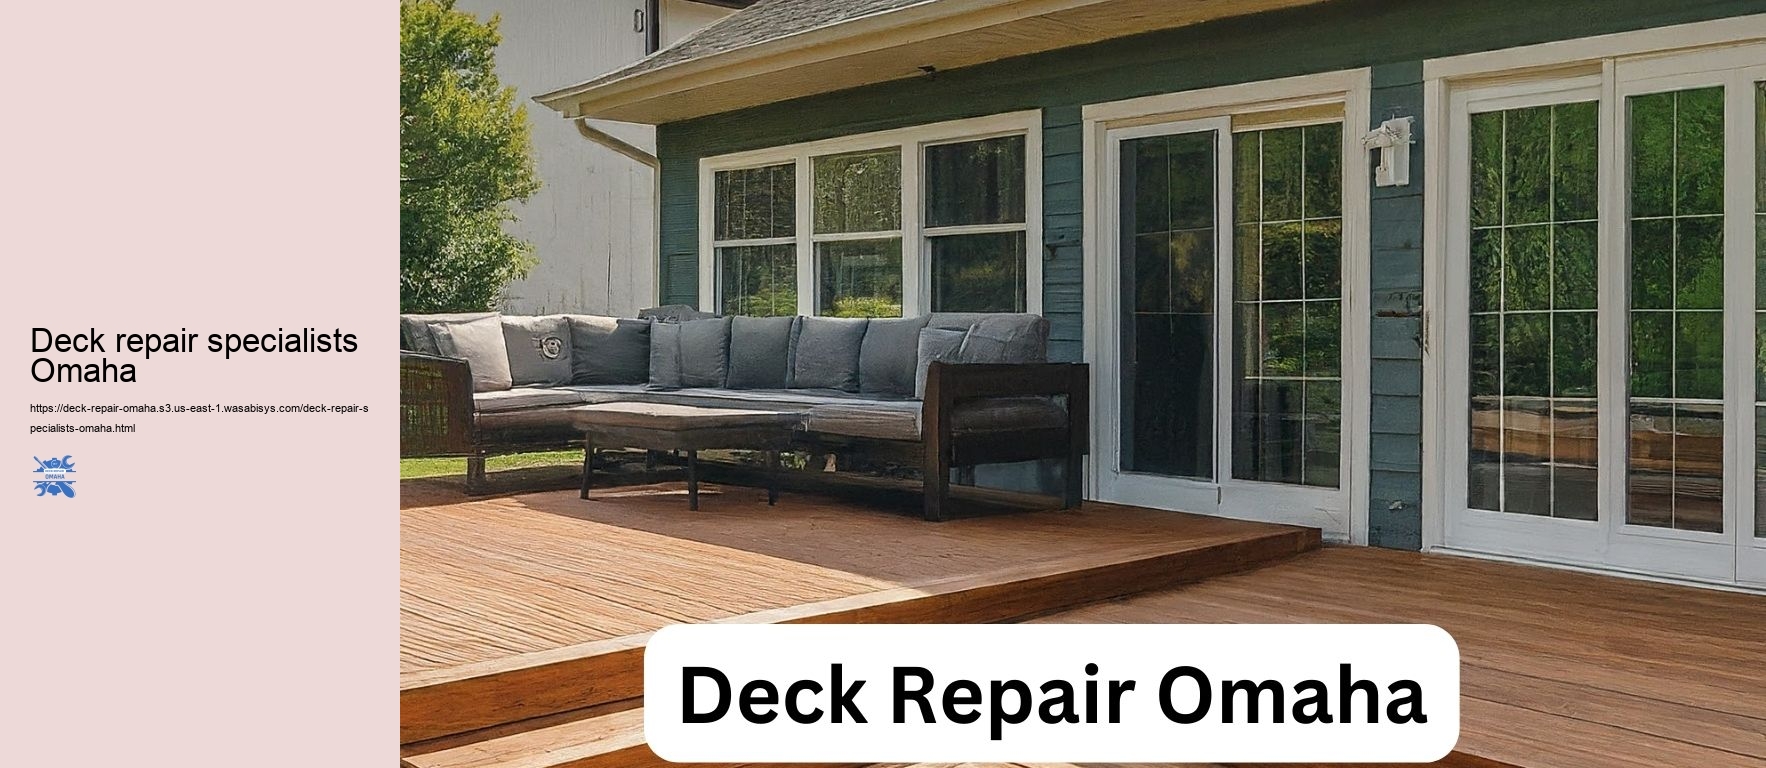 Deck repair specialists Omaha